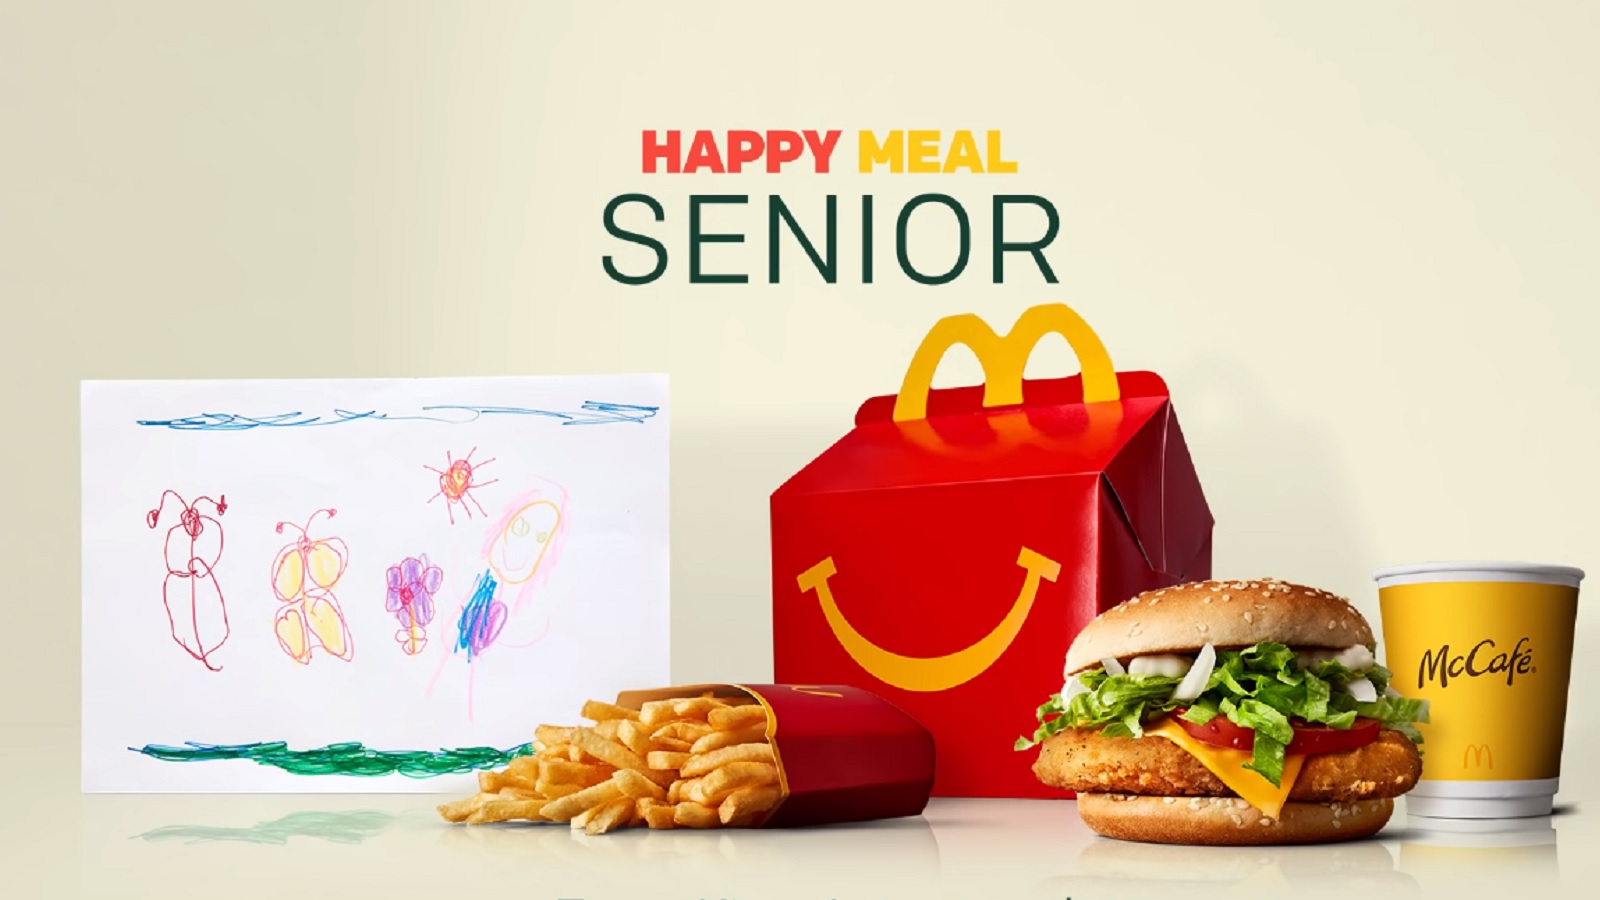 McDonald’s New Happy Meal Has a Heartwarming Twist